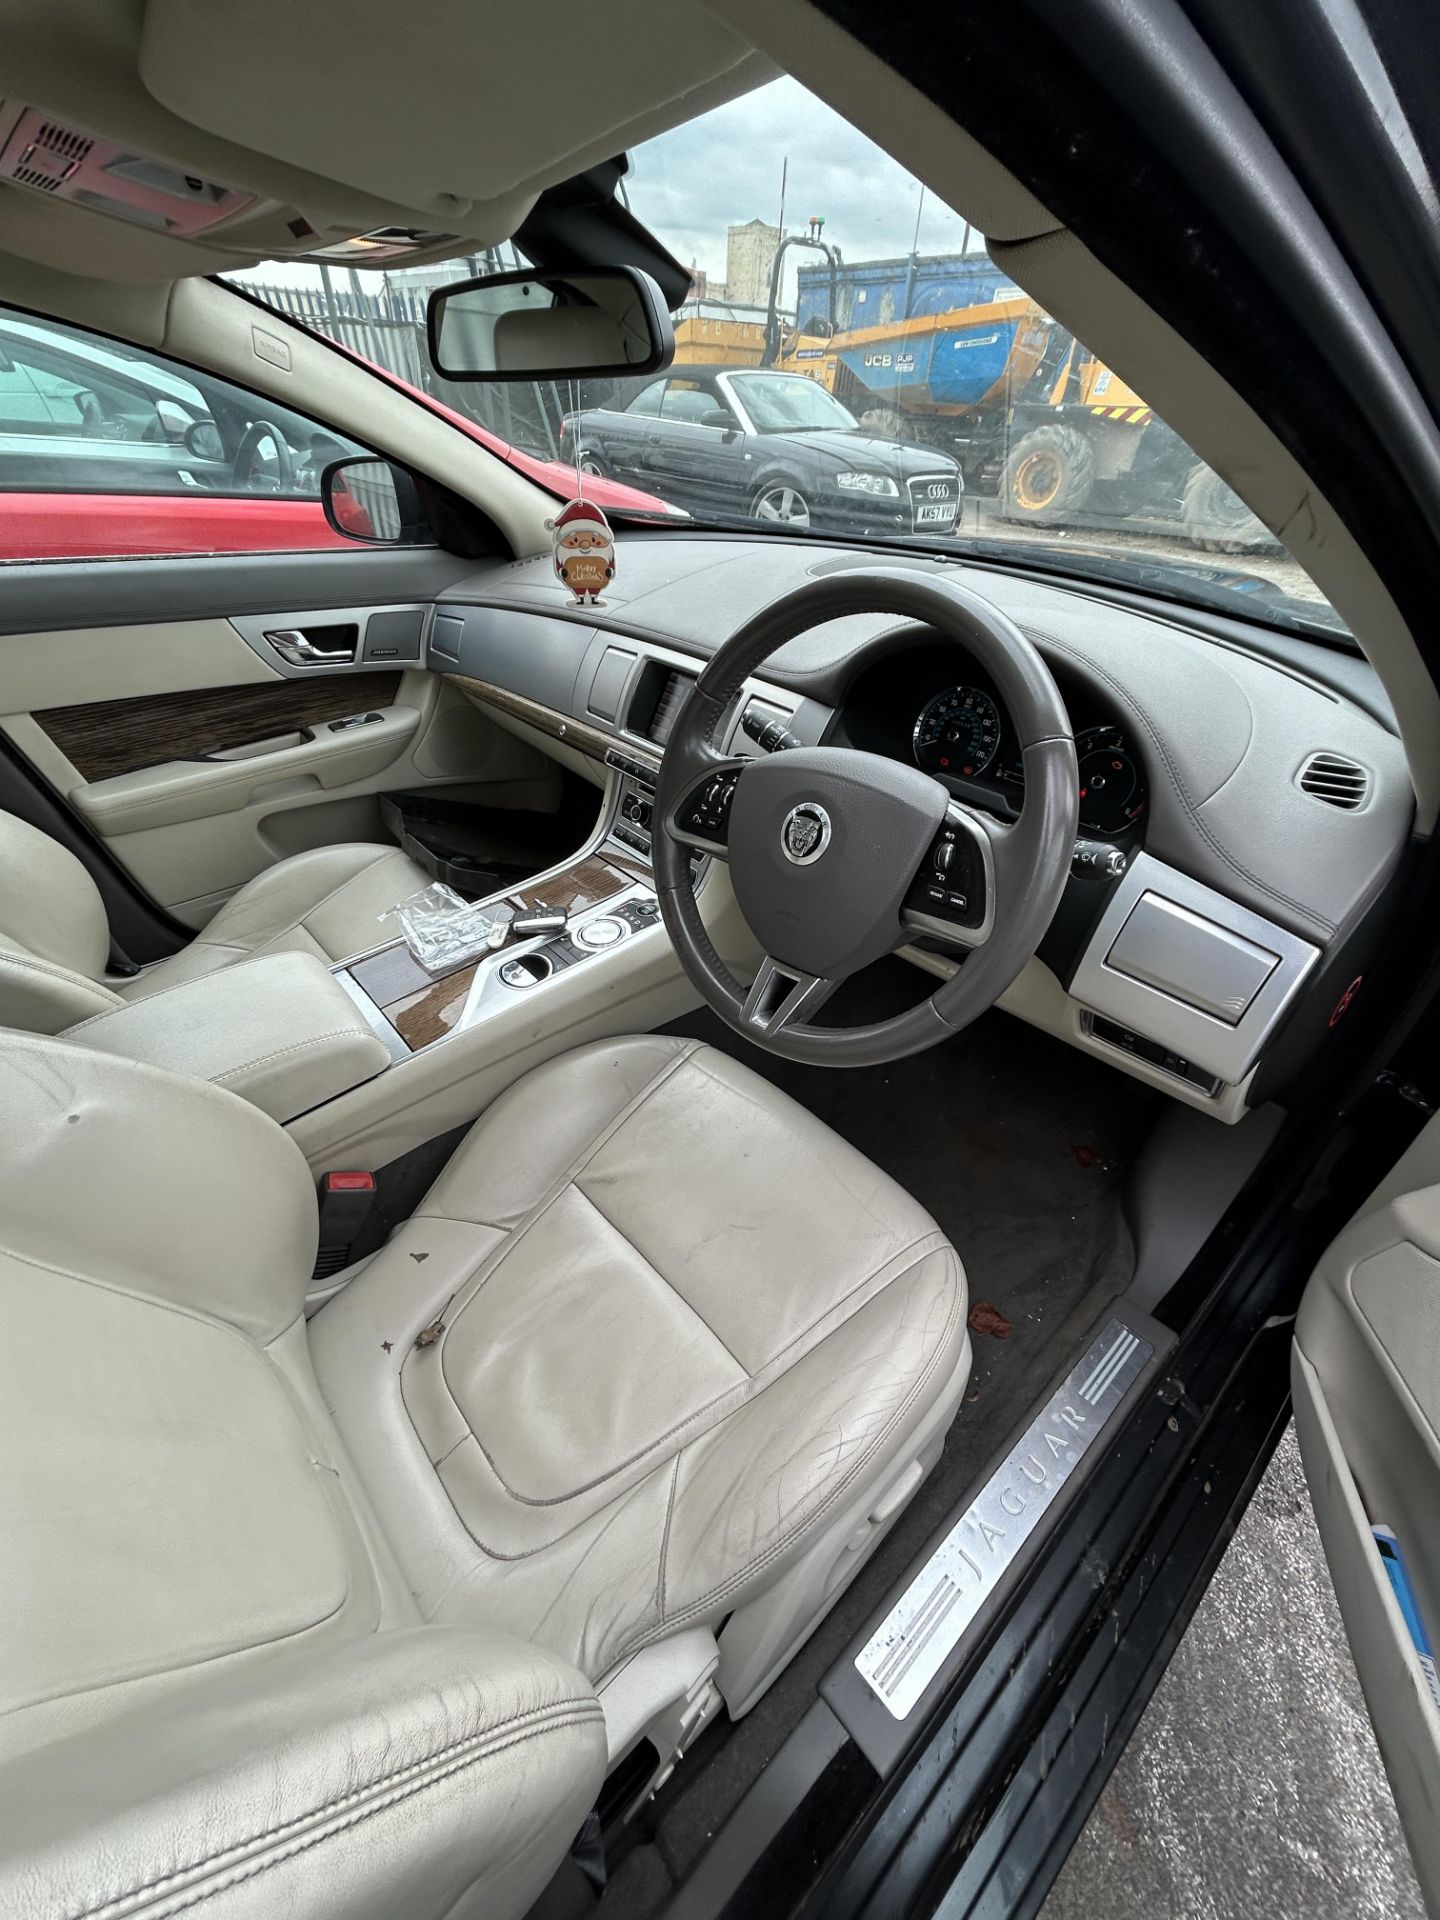 Jaguar XF Premium Luxury D Auto Diesel 4 Door Saloon | PO13 TOH | 165,697 Miles - Image 6 of 9